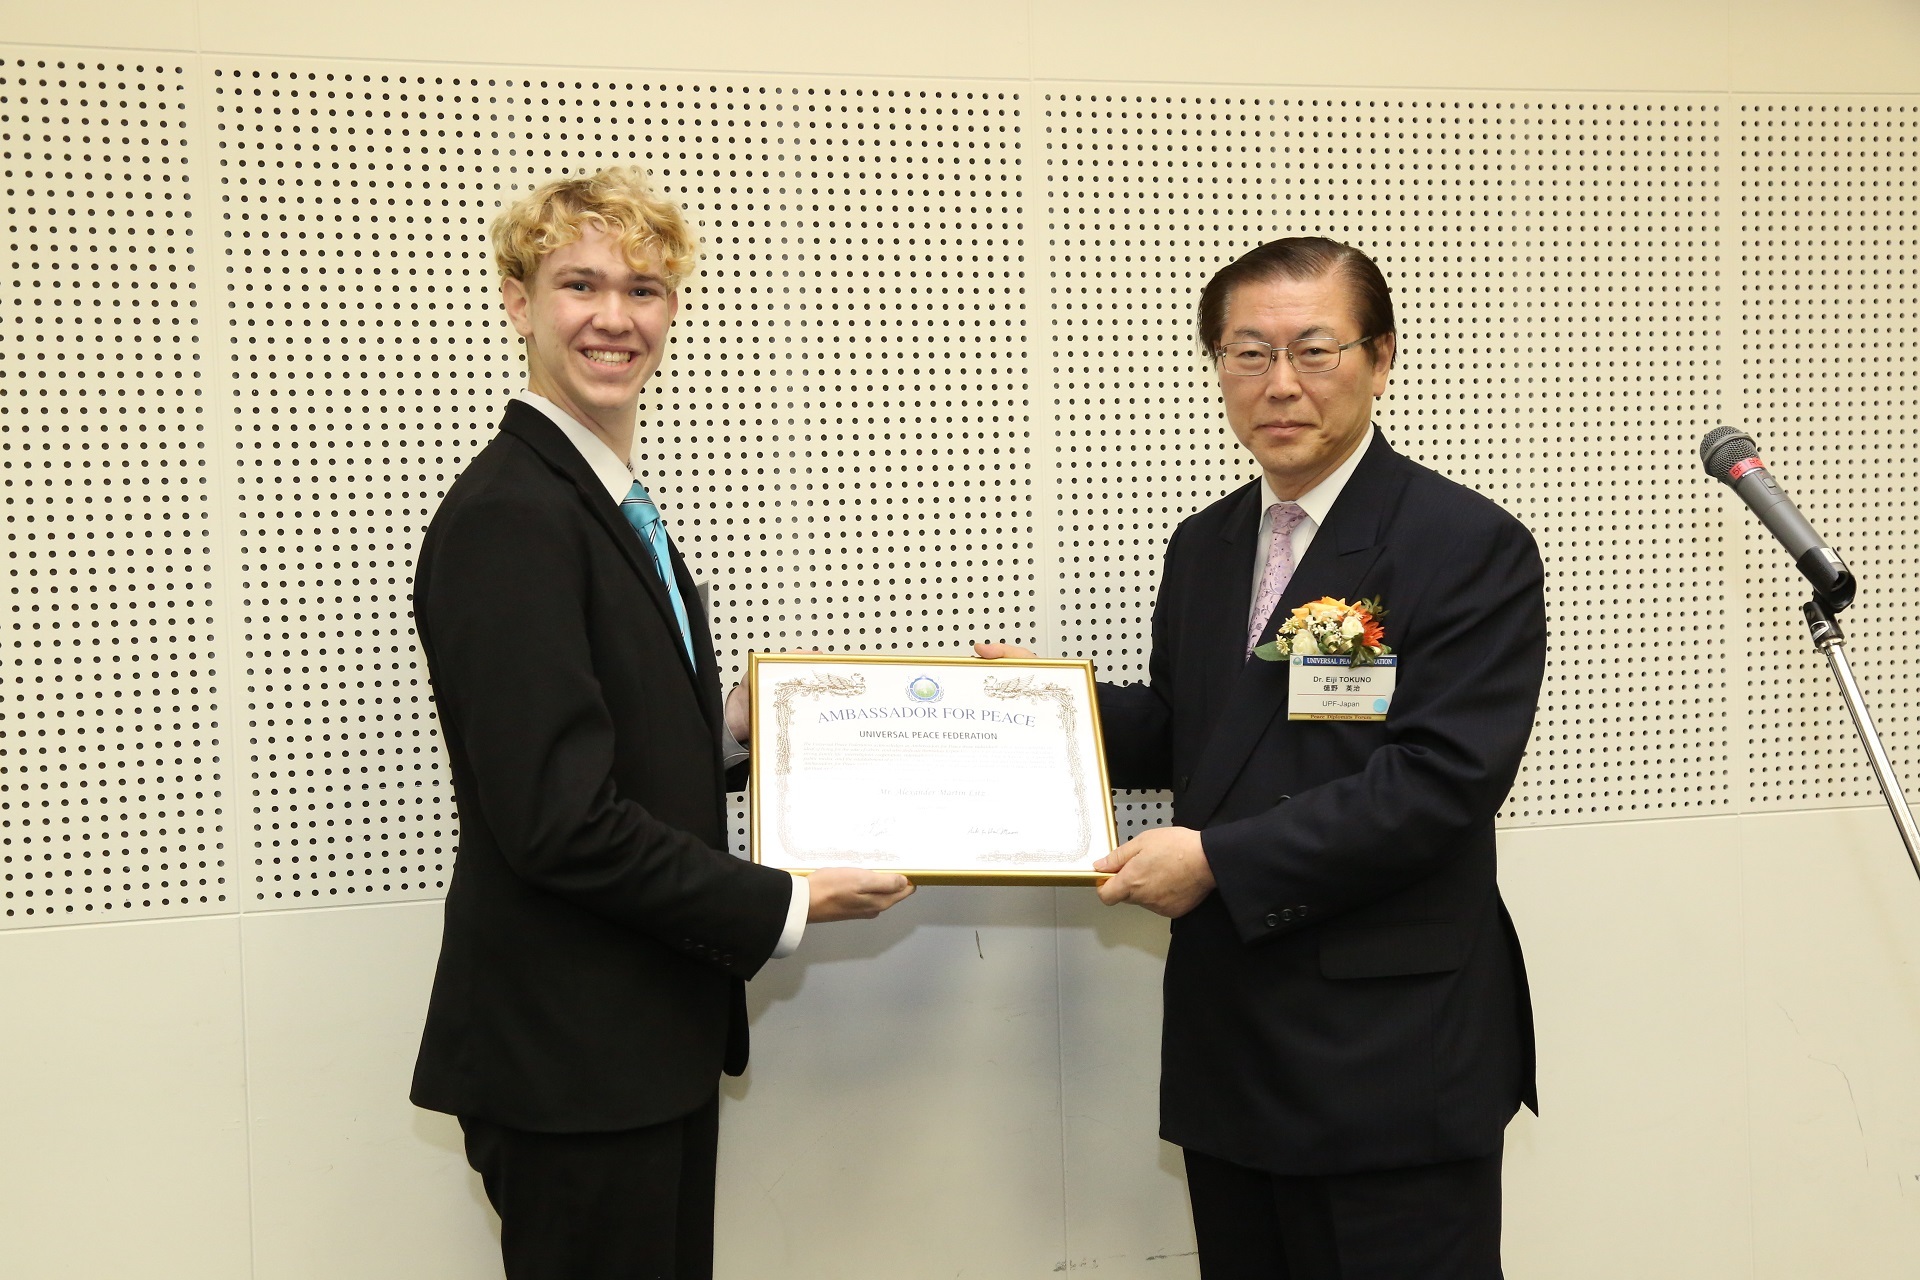 Alex receiving the Universal Peace Ambassador Award